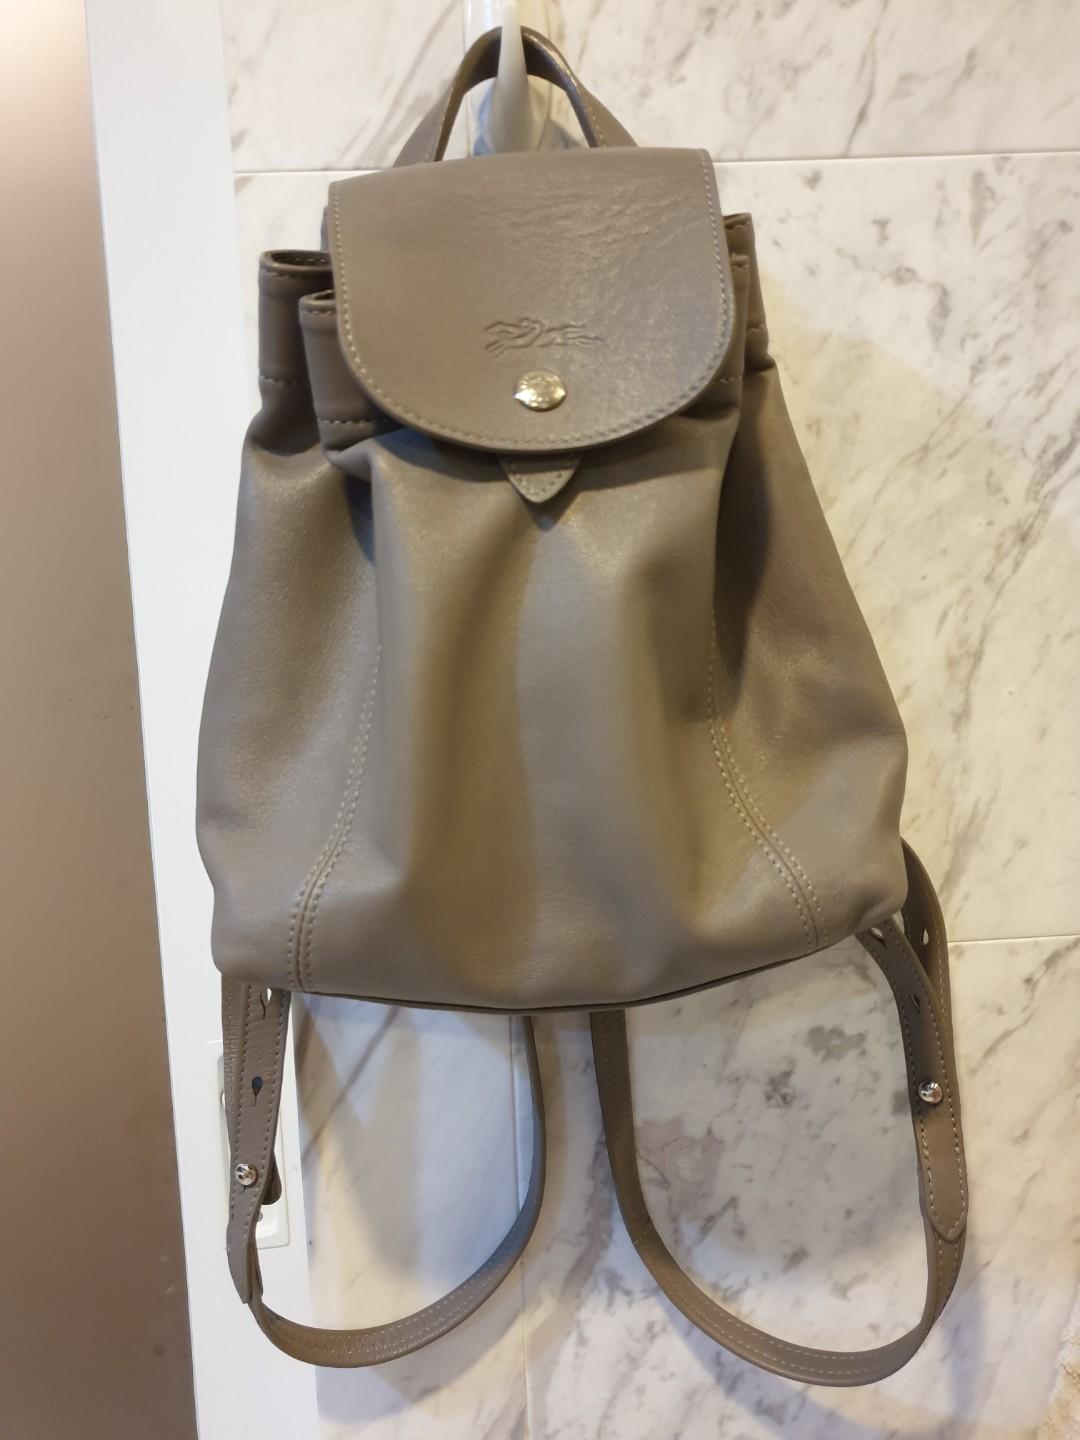 longchamp backpack cuir